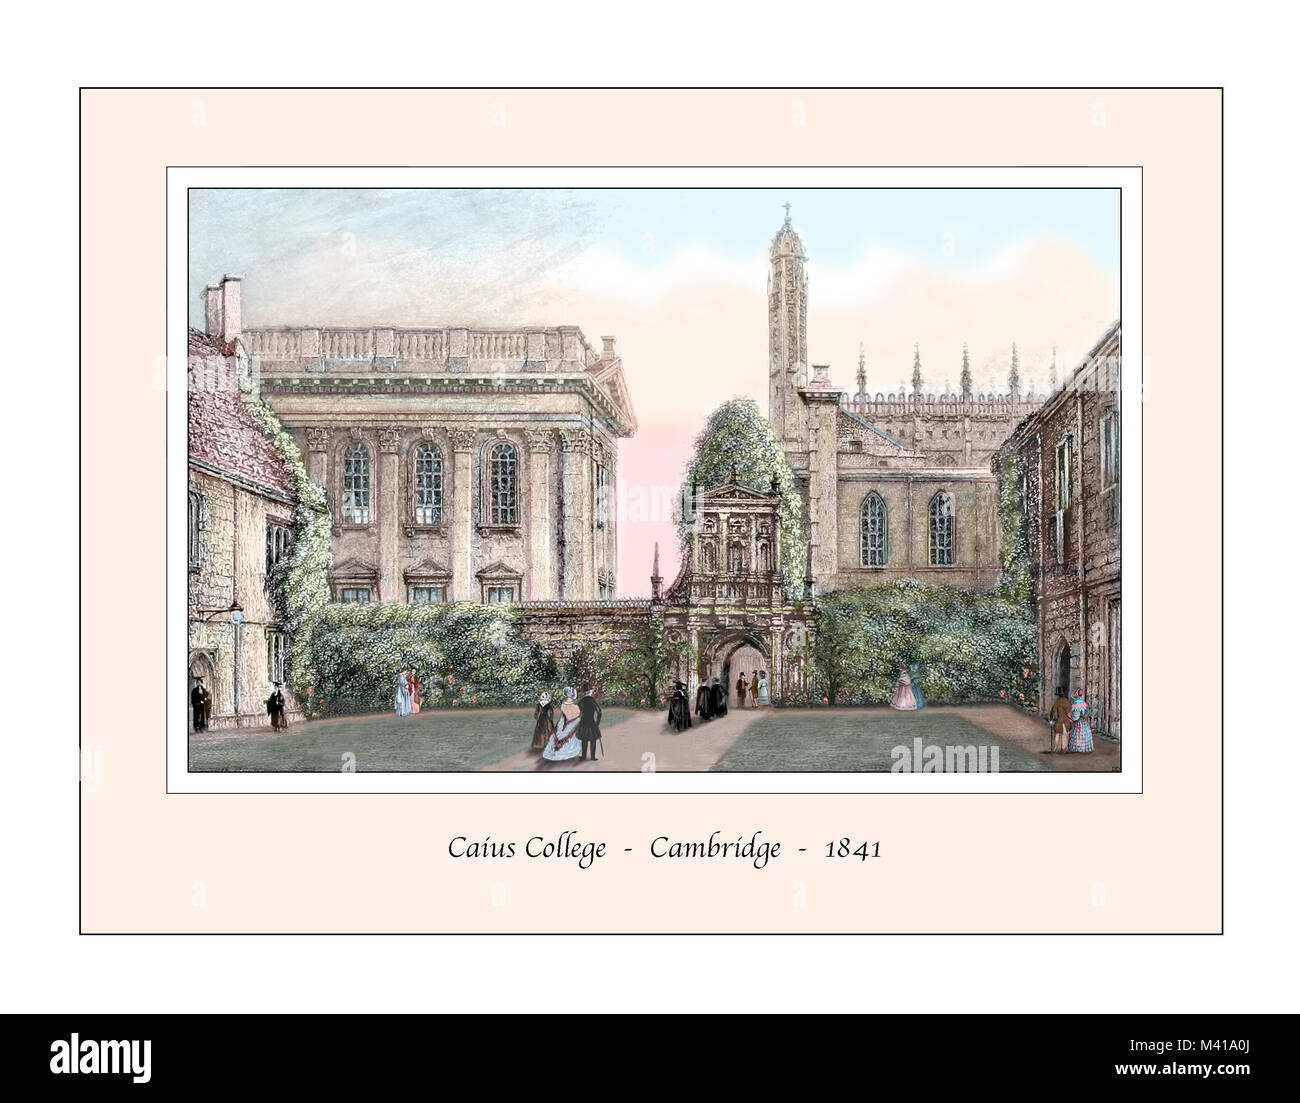 Caius College Cambridge Original Design based on a 19th century Engraving Stock Photo